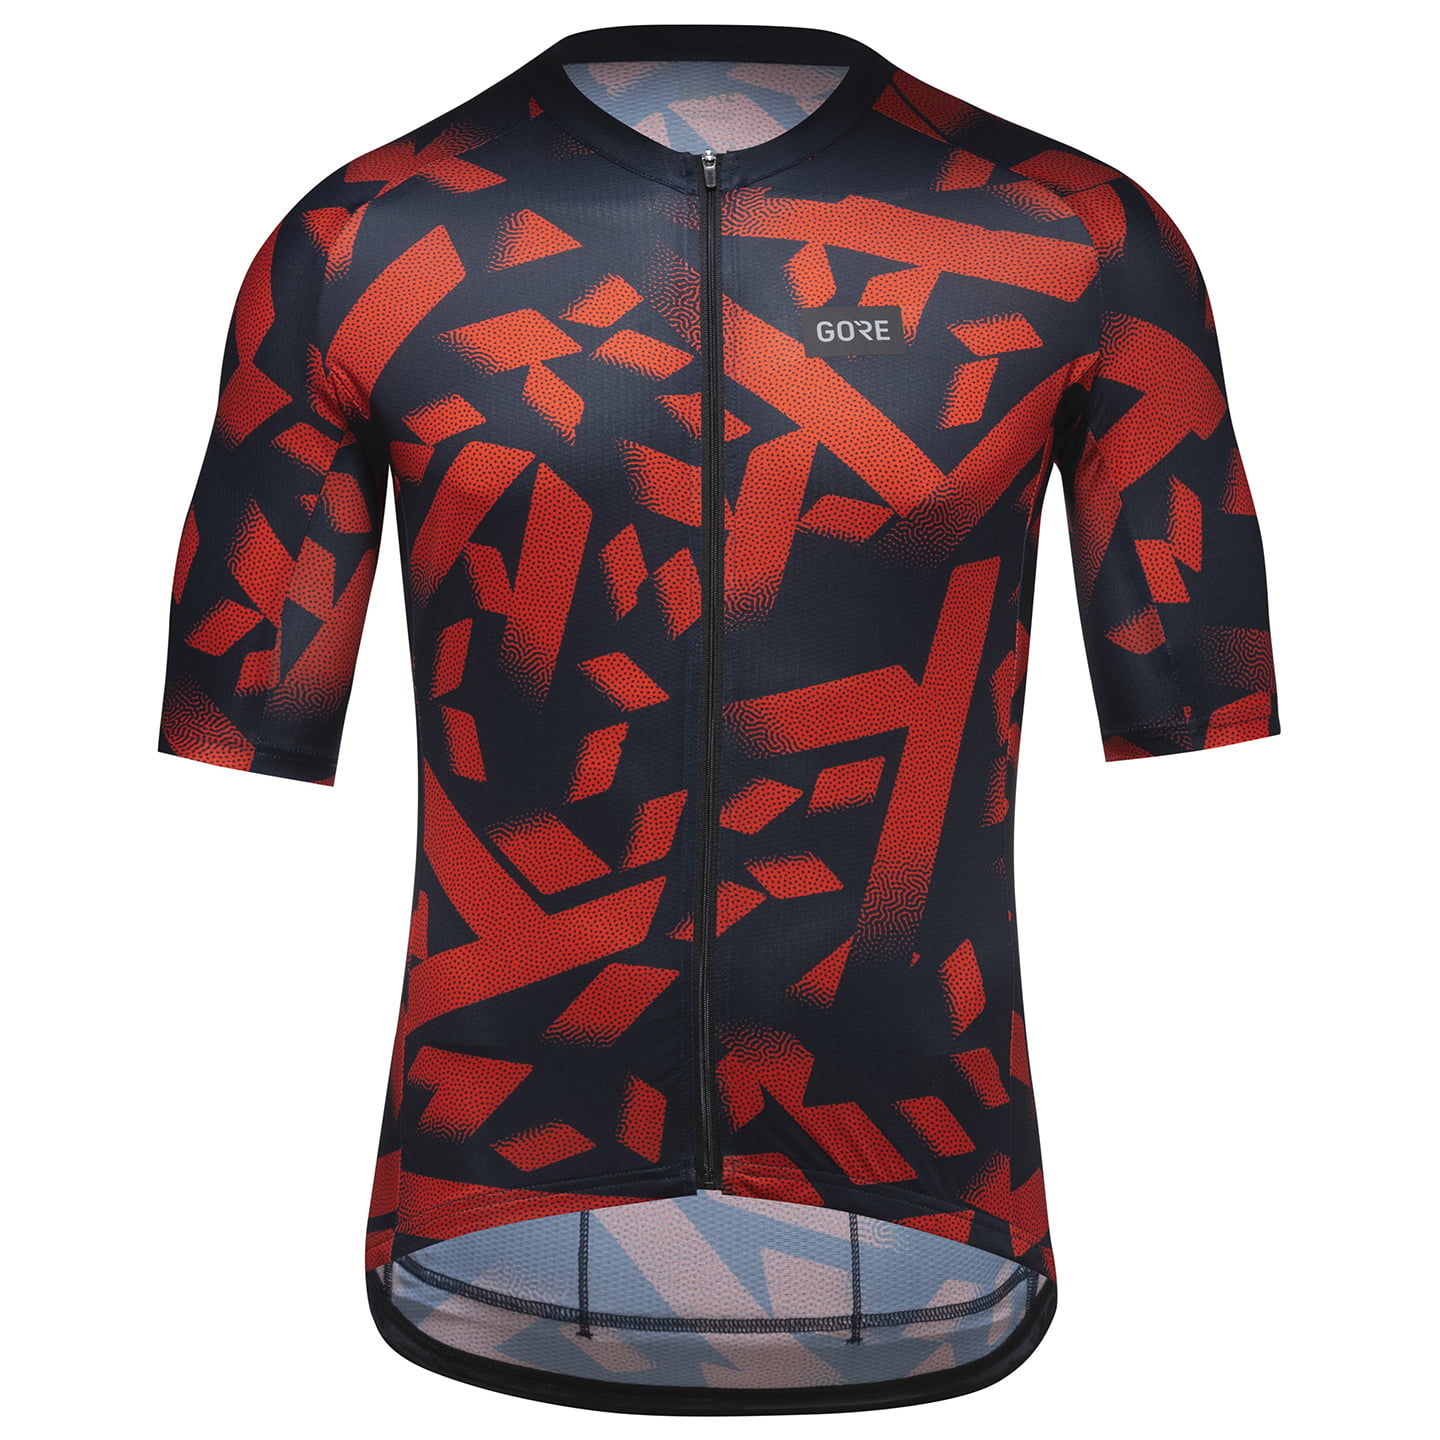 Spirit Signal Camo Short Sleeve Jersey Short Sleeve Jersey, for men, size XL, Cycling jersey, Cycle clothing